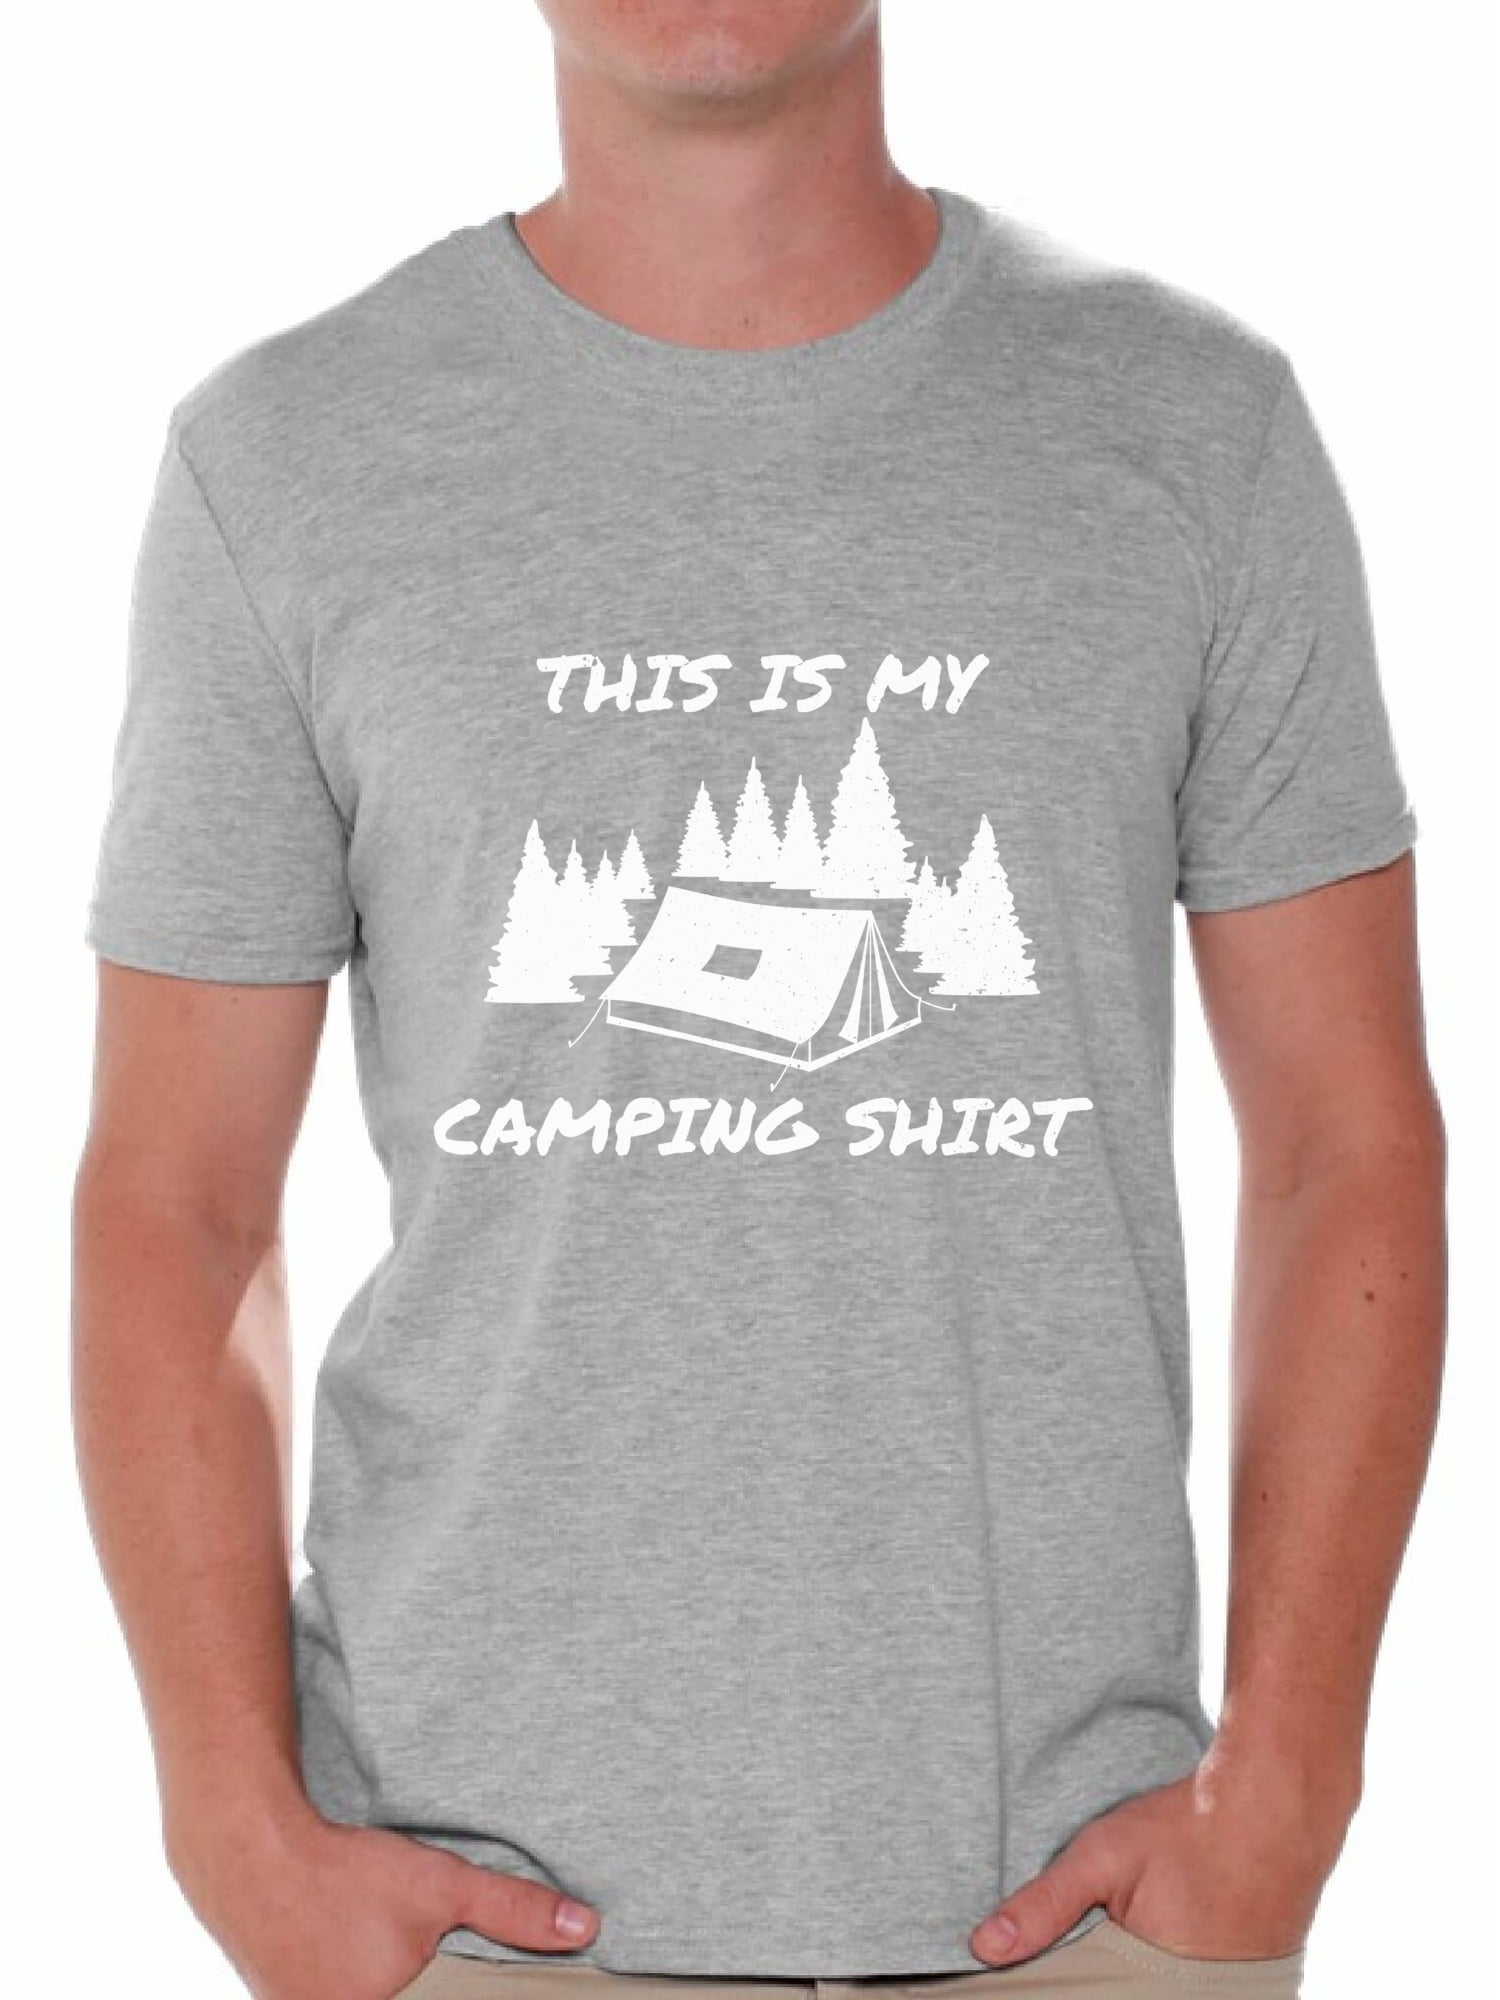  Awkward Styles Camp Half-Blood T-Shirt Geek Kids T Shirts:  Clothing, Shoes & Jewelry